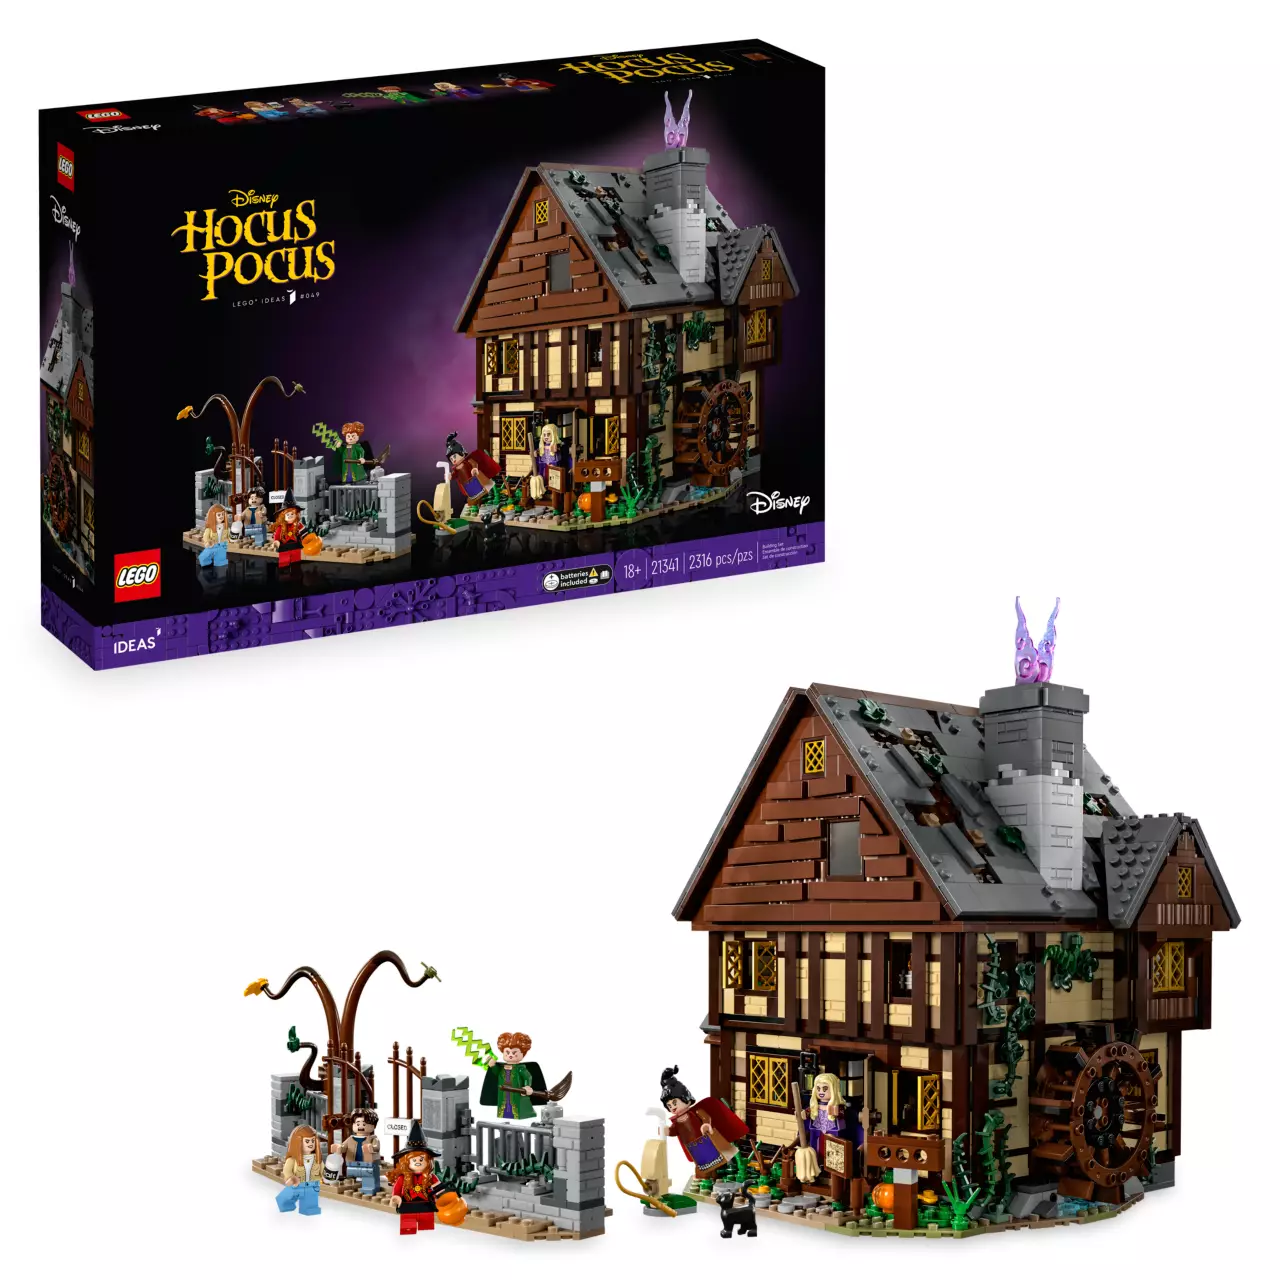 LEGO Disney Hocus Pocus: The Sanderson Sisters’ Cottage #21341